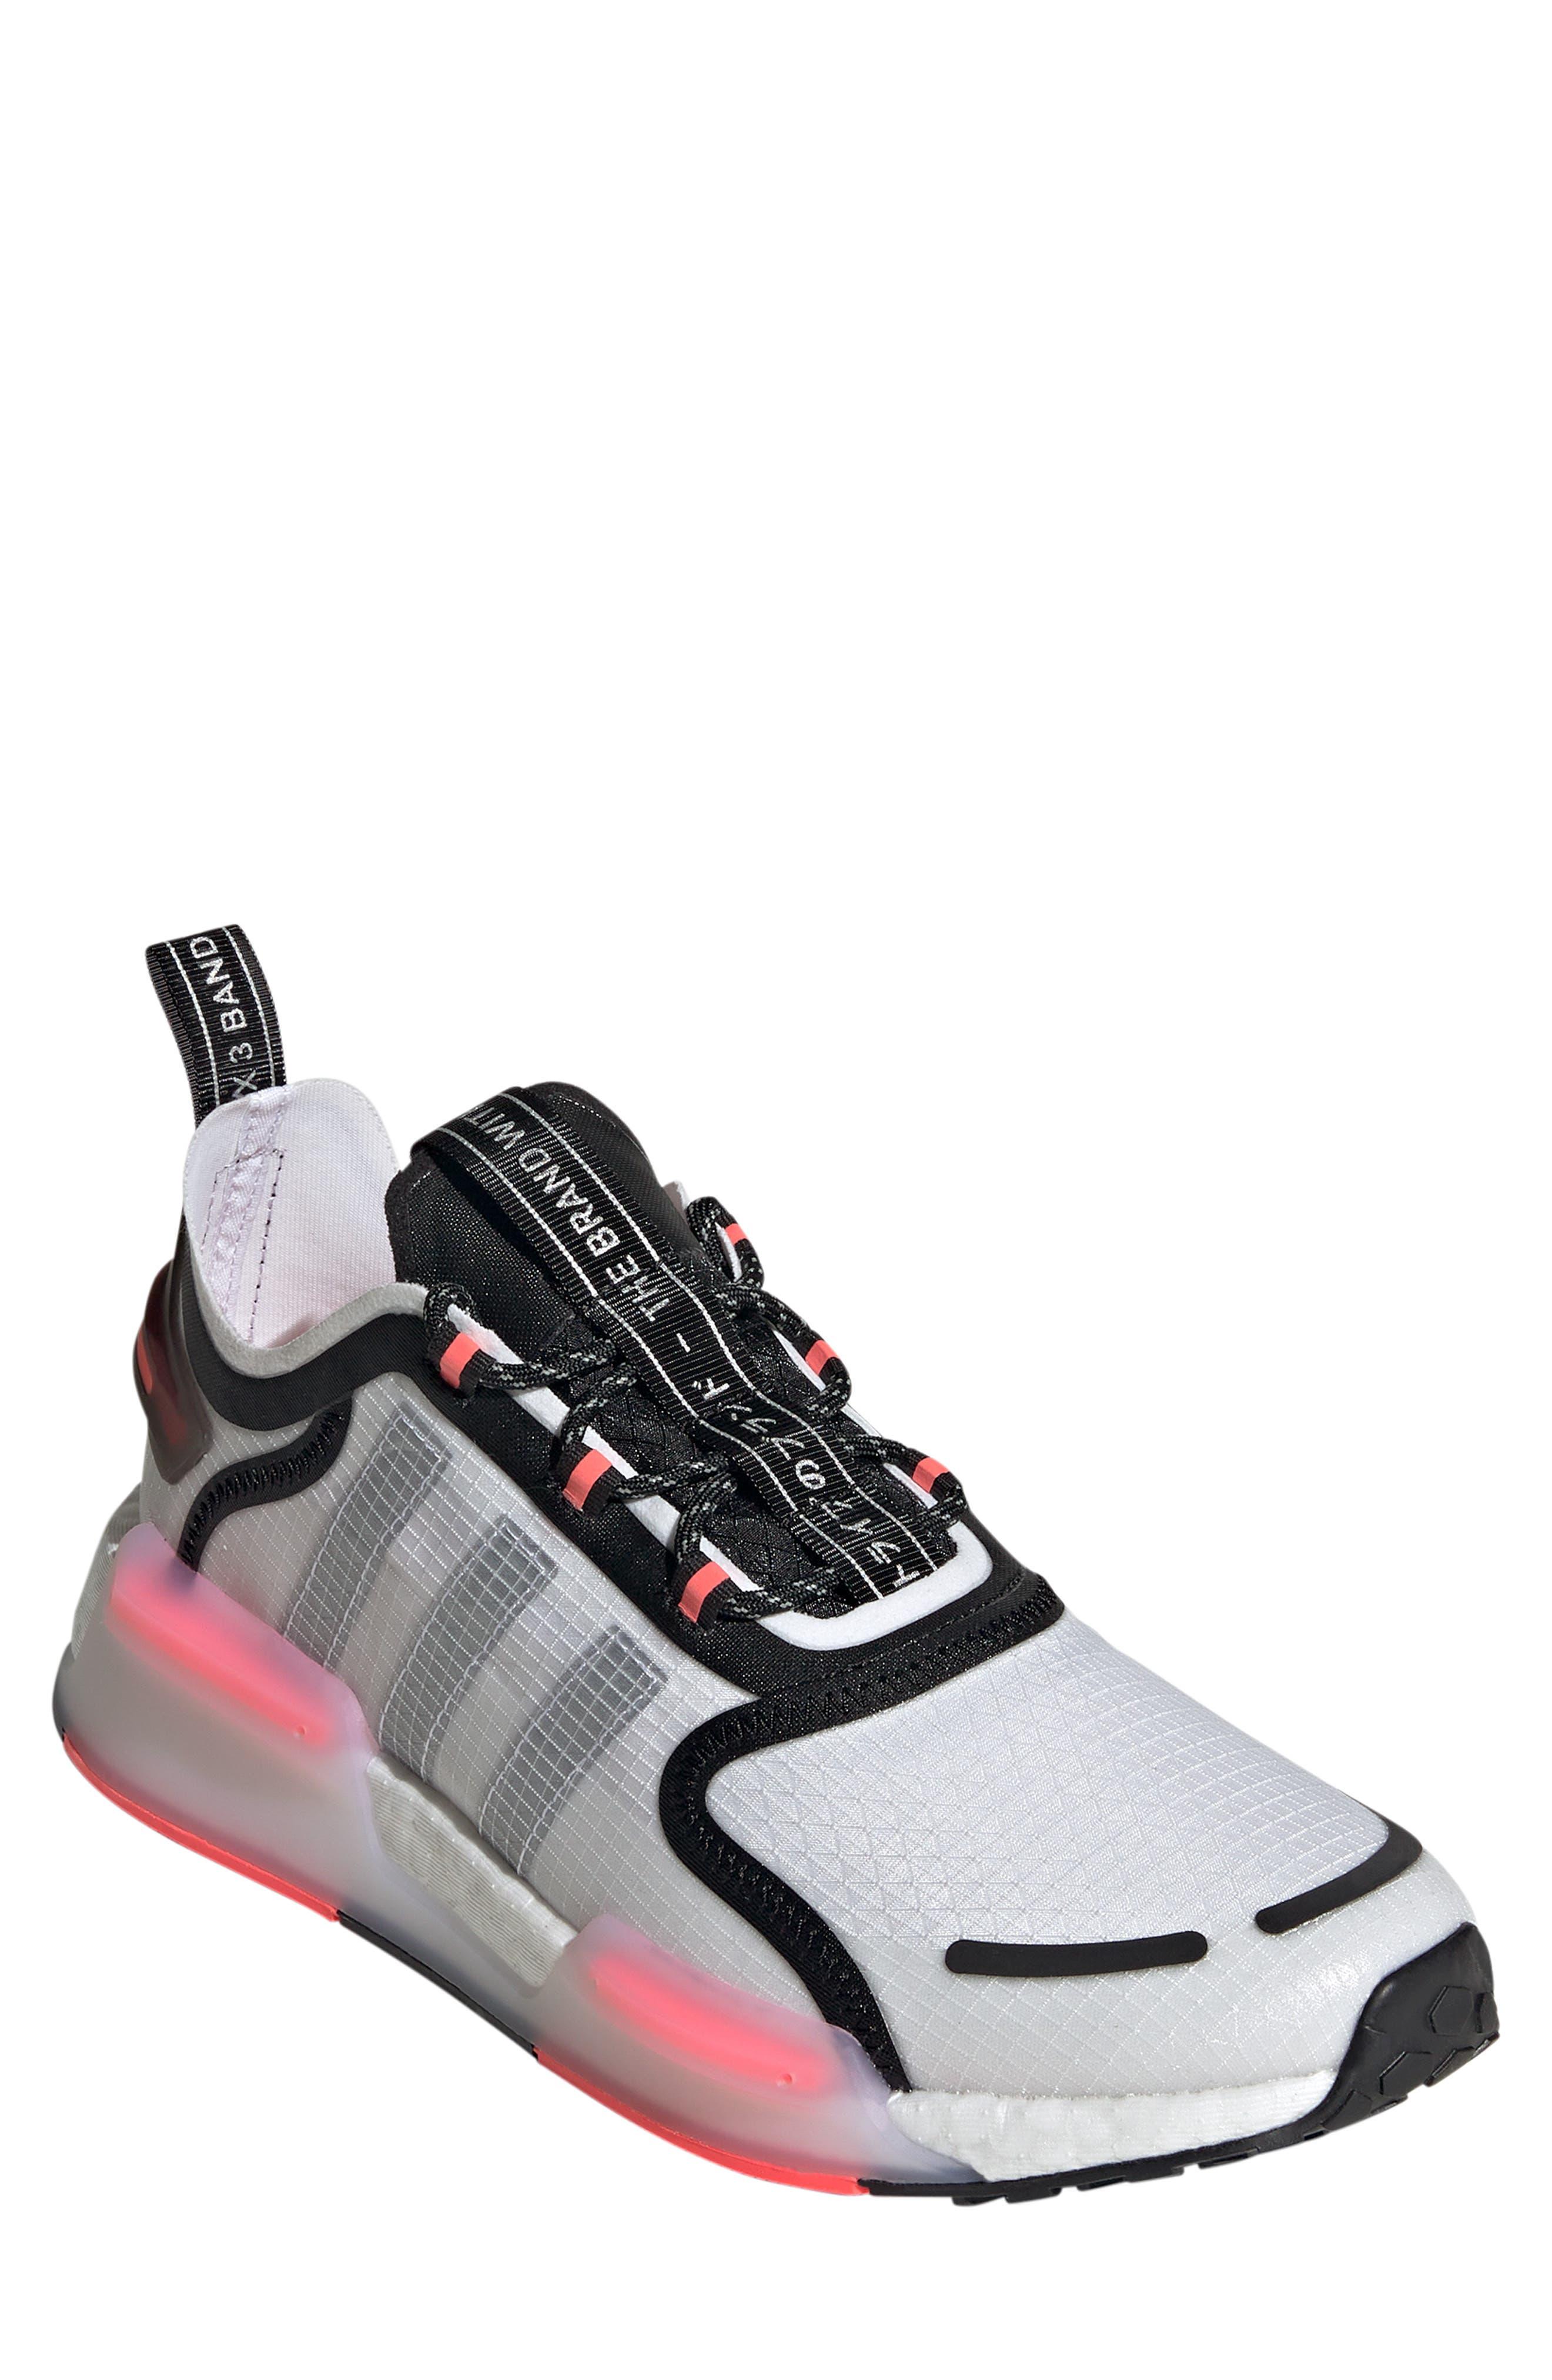 adidas Nmd_v3 Running Shoe White in | Men Lyst for